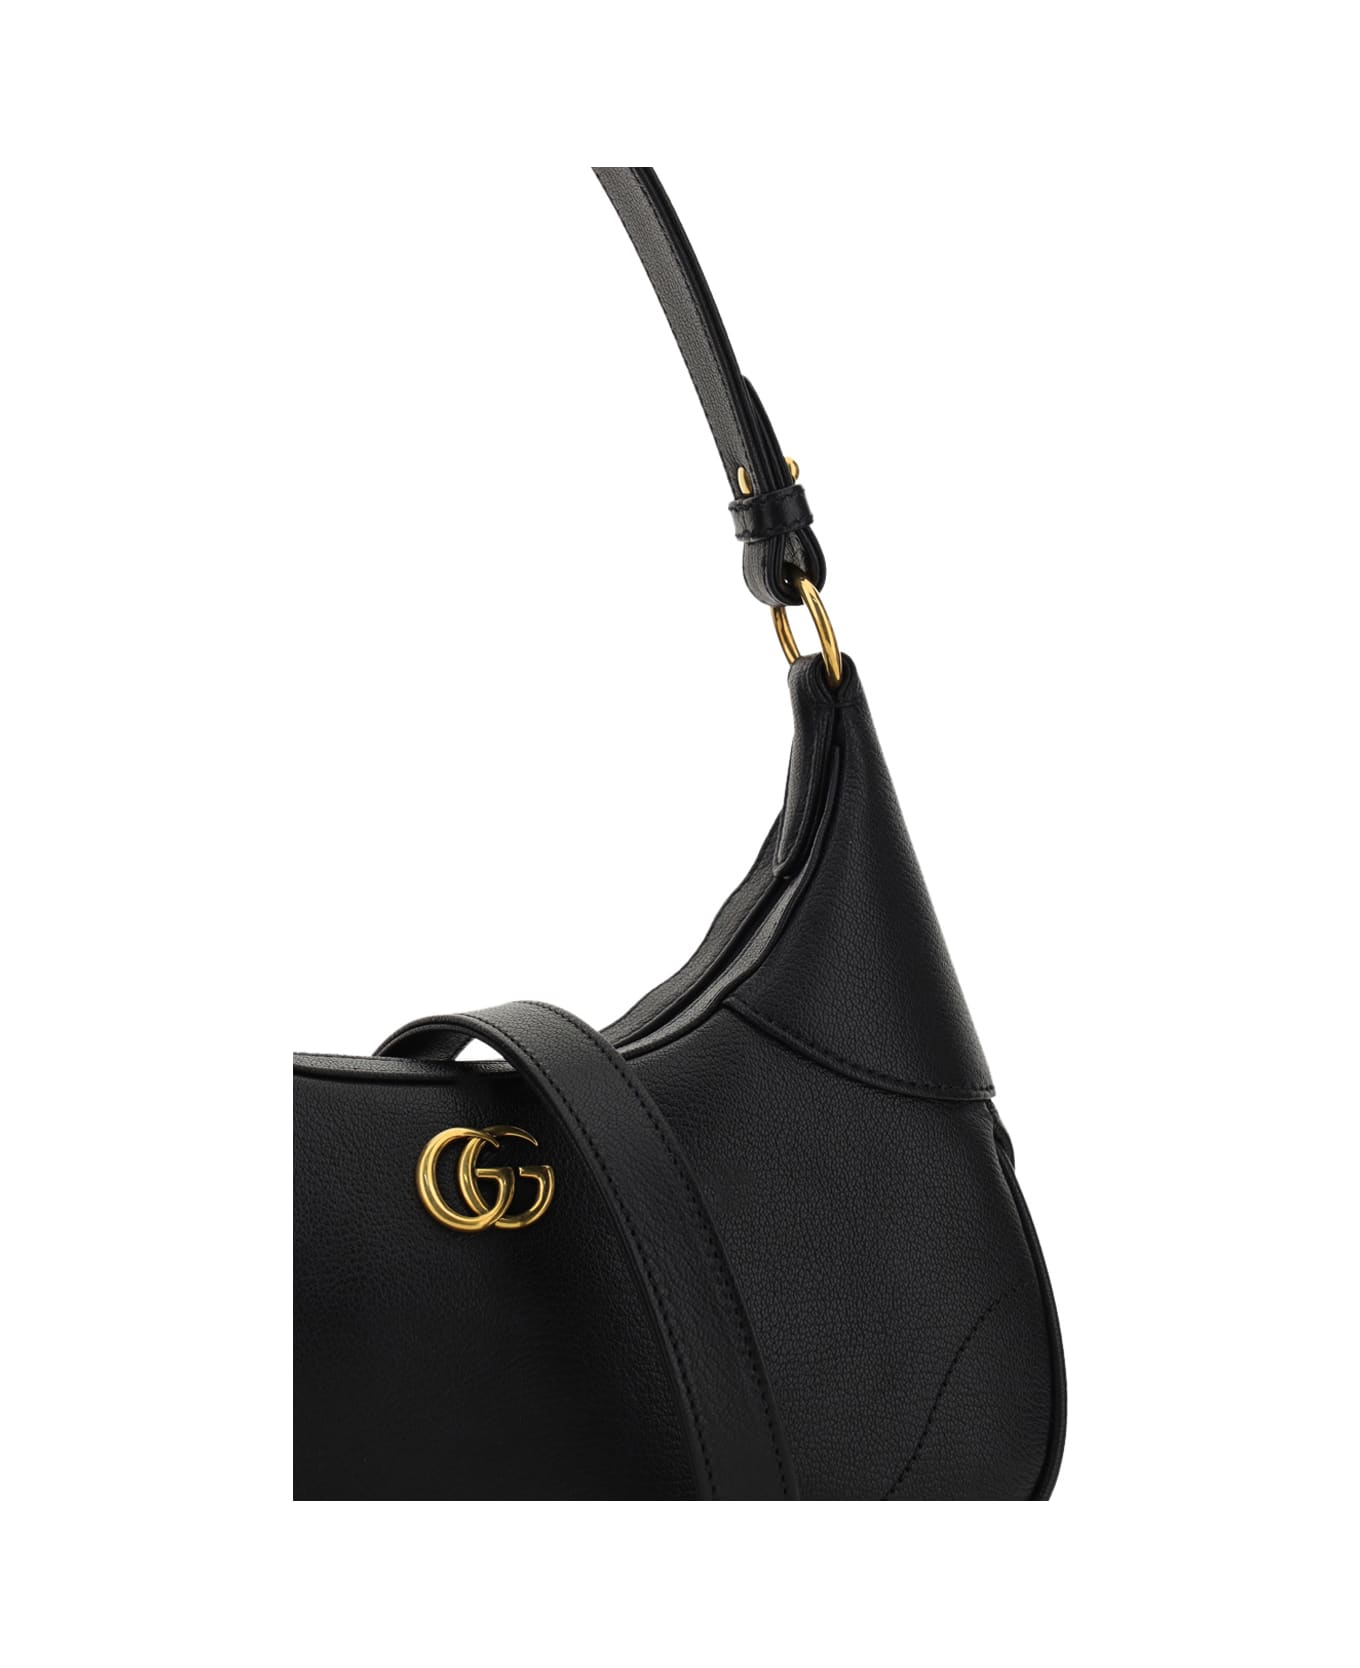 Gucci Aphrodite Shoulder Bag - Black